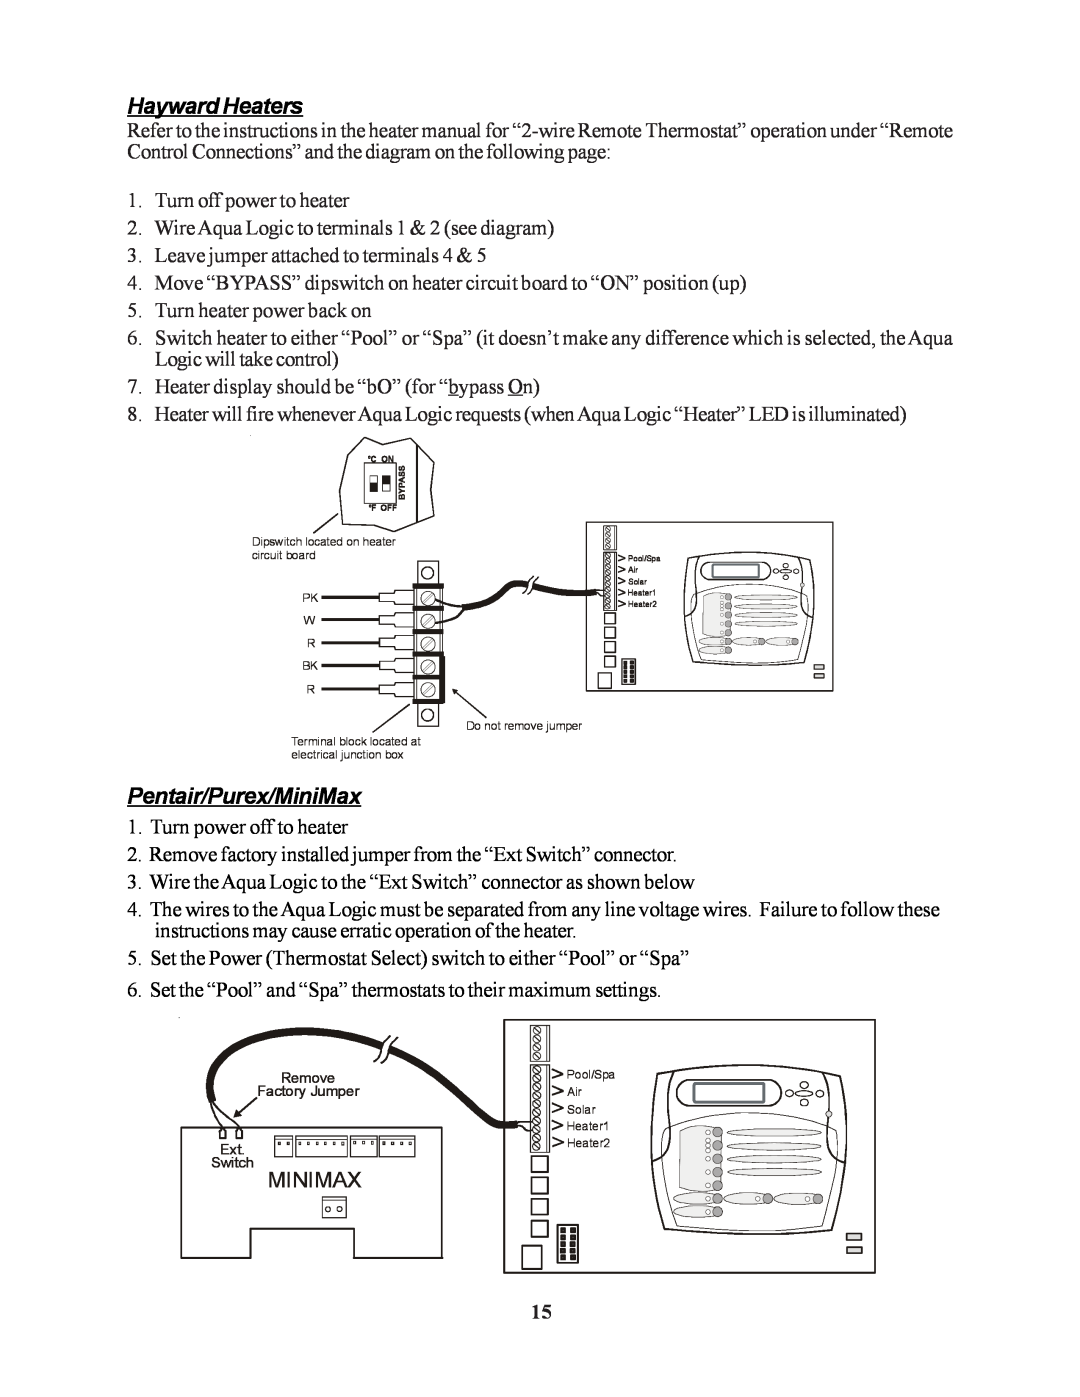 Raypak PS-4 PS-8 installation manual Hayward Heaters, Pentair/Purex/MiniMax, Minimax 